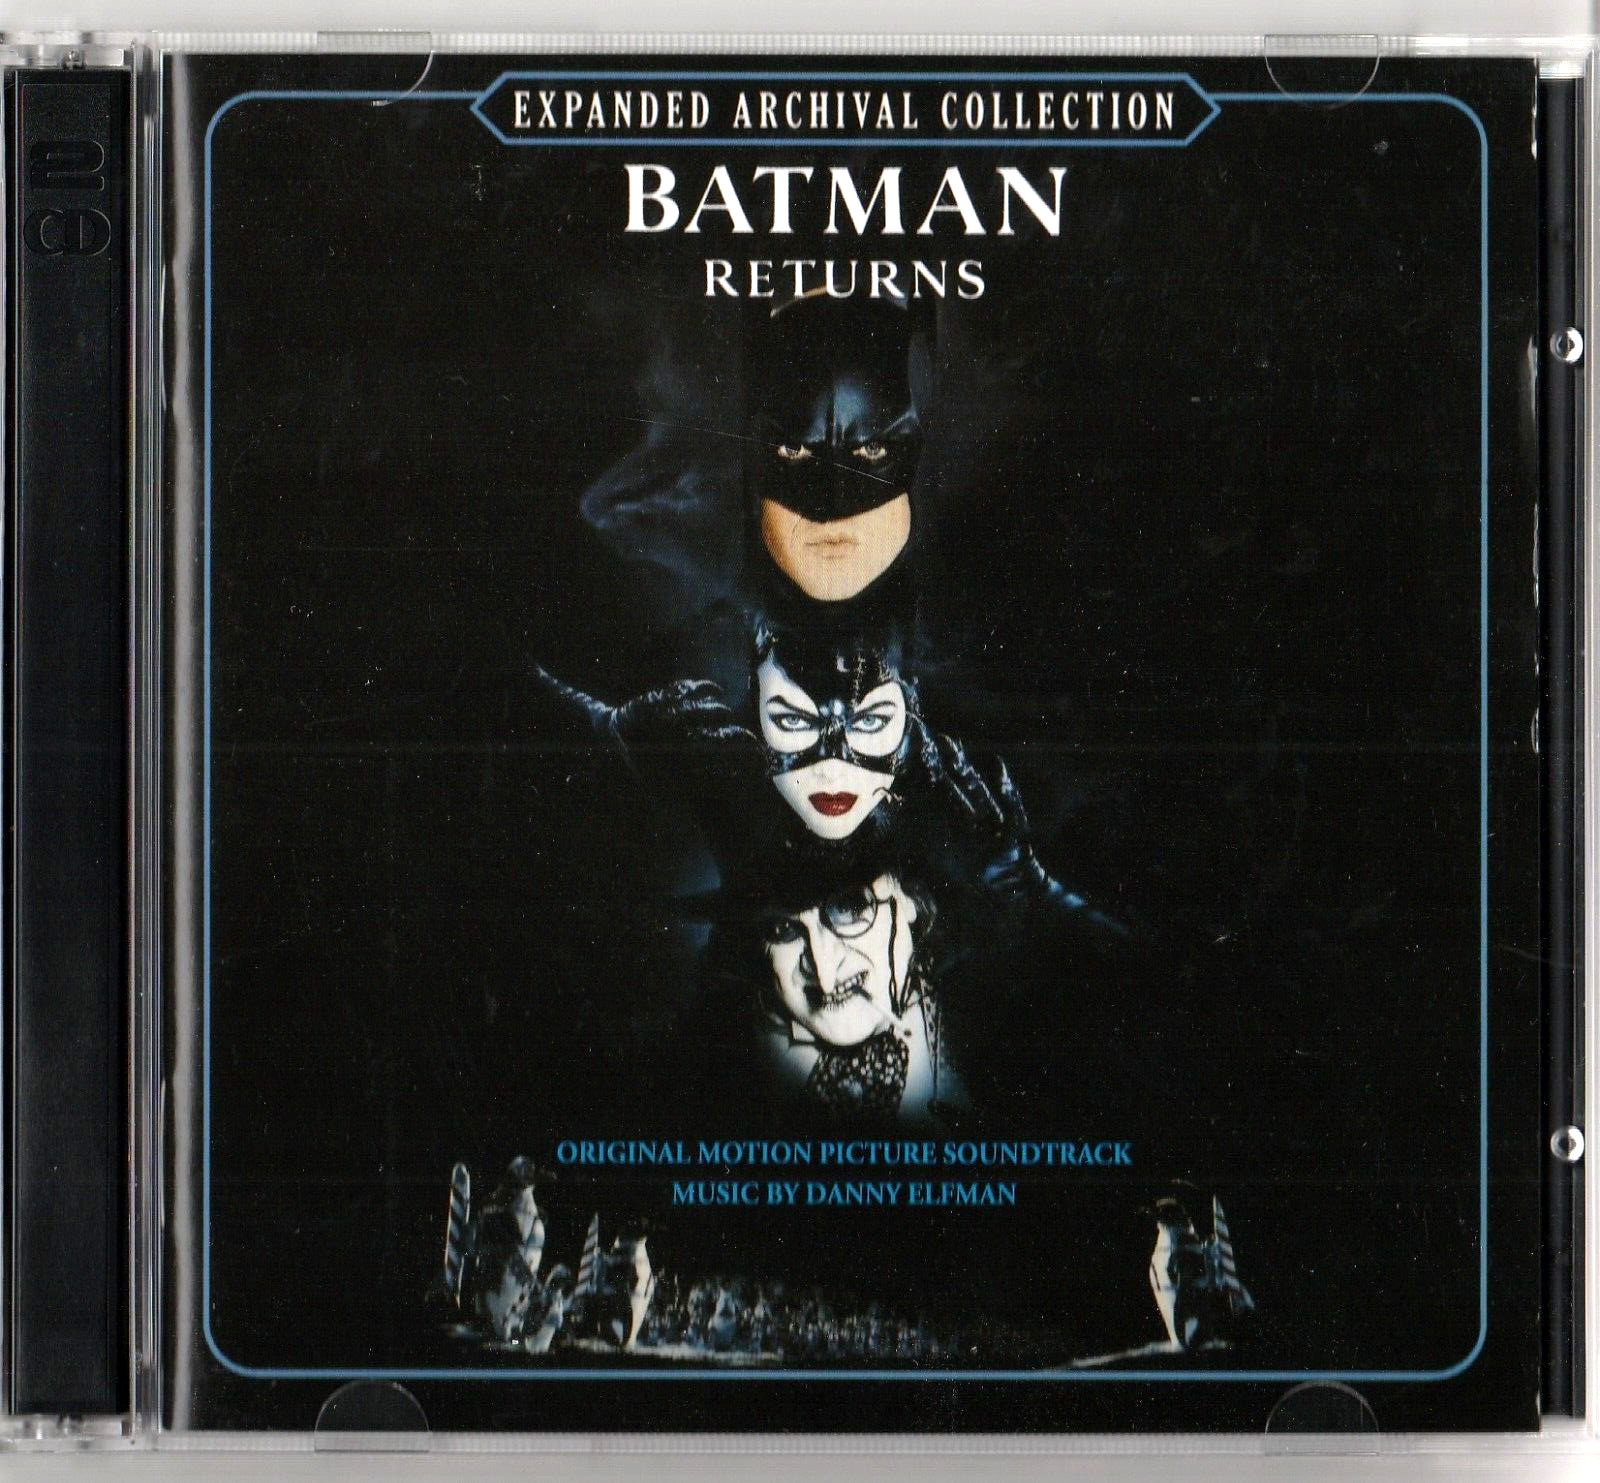 Batman Returns Soundtrack 2 CD Set Expanded Archival Collection Danny Elfman